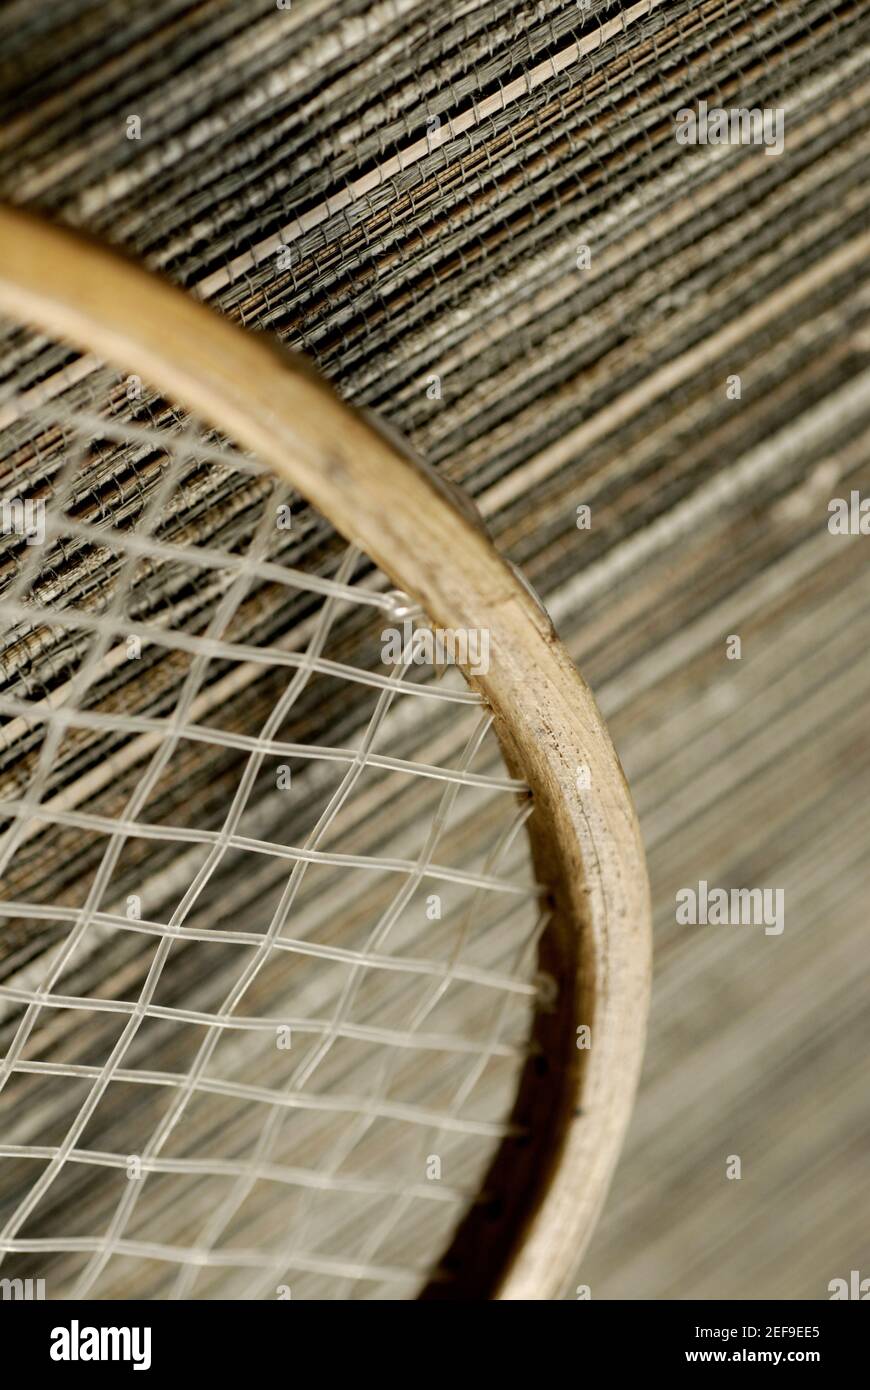 Close-up of a tennis racket Stock Photo